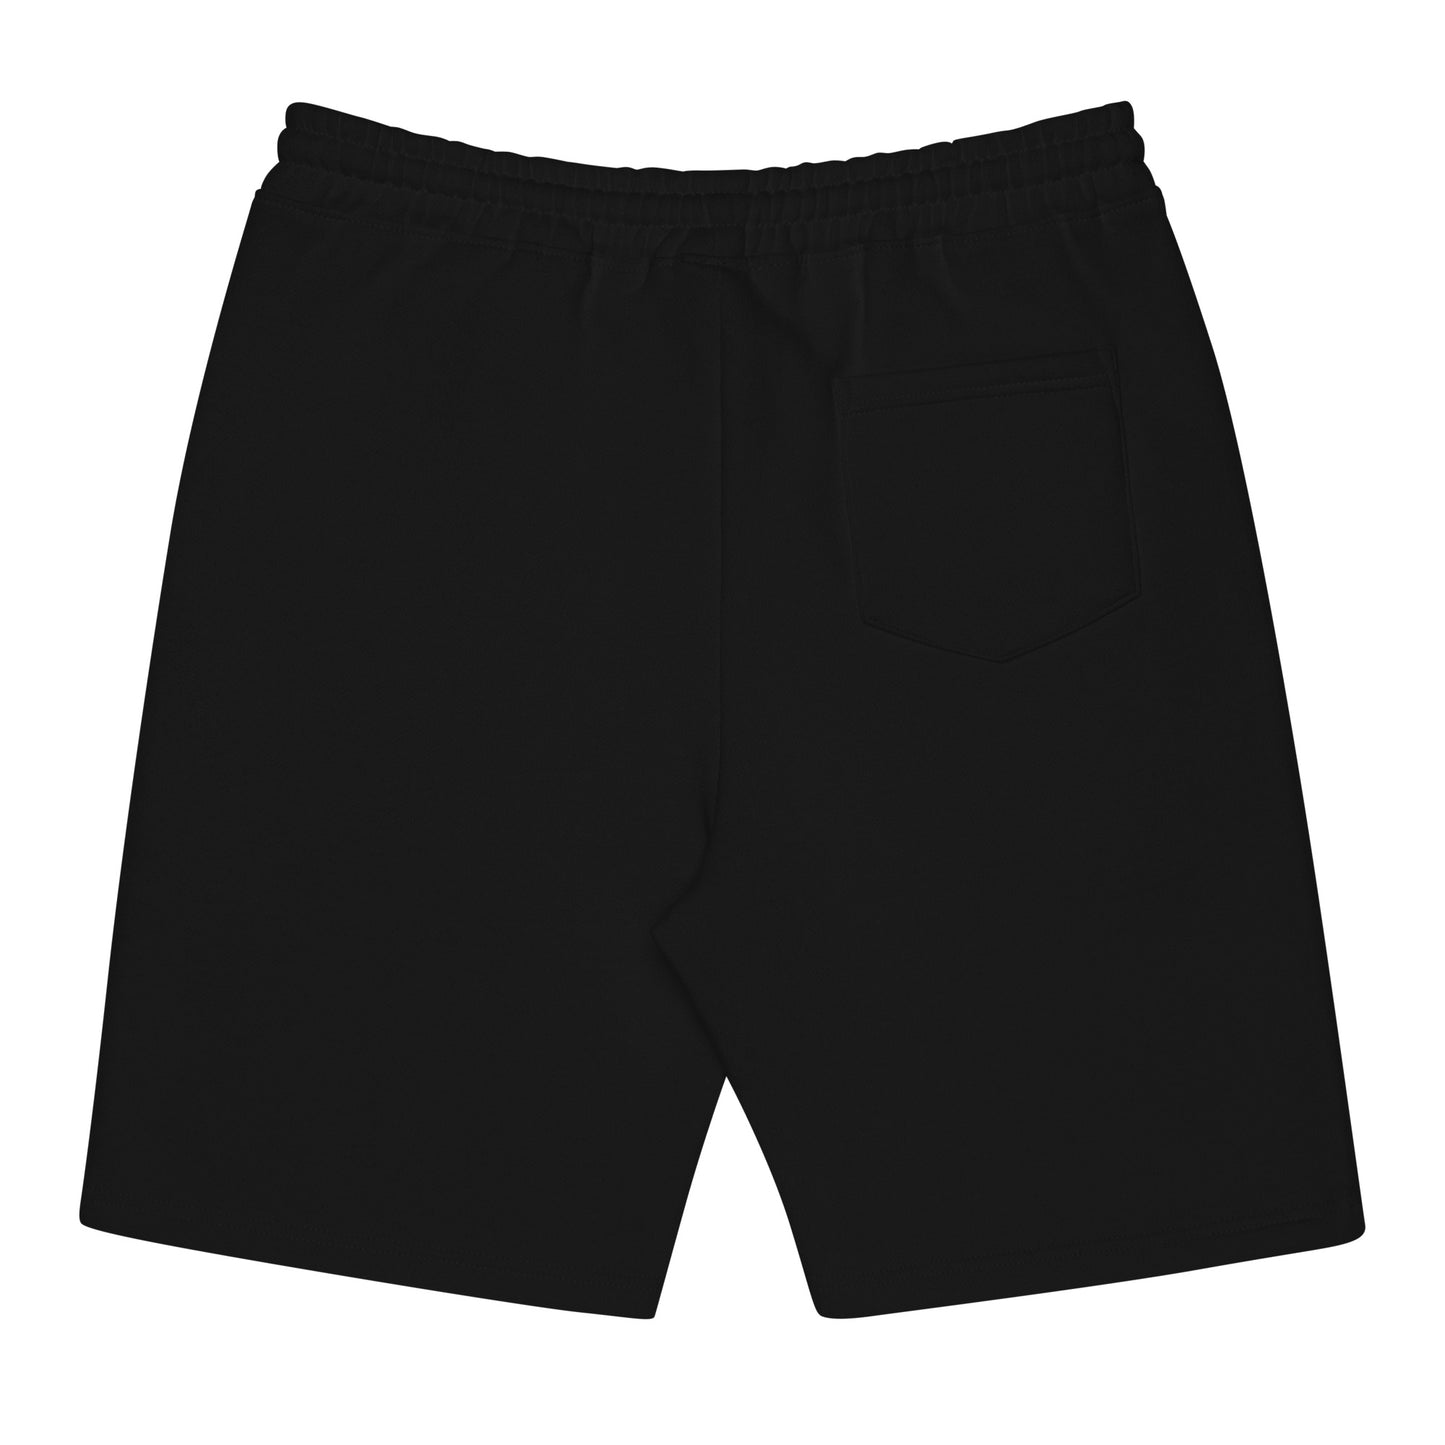 SS- Cotton Shorts